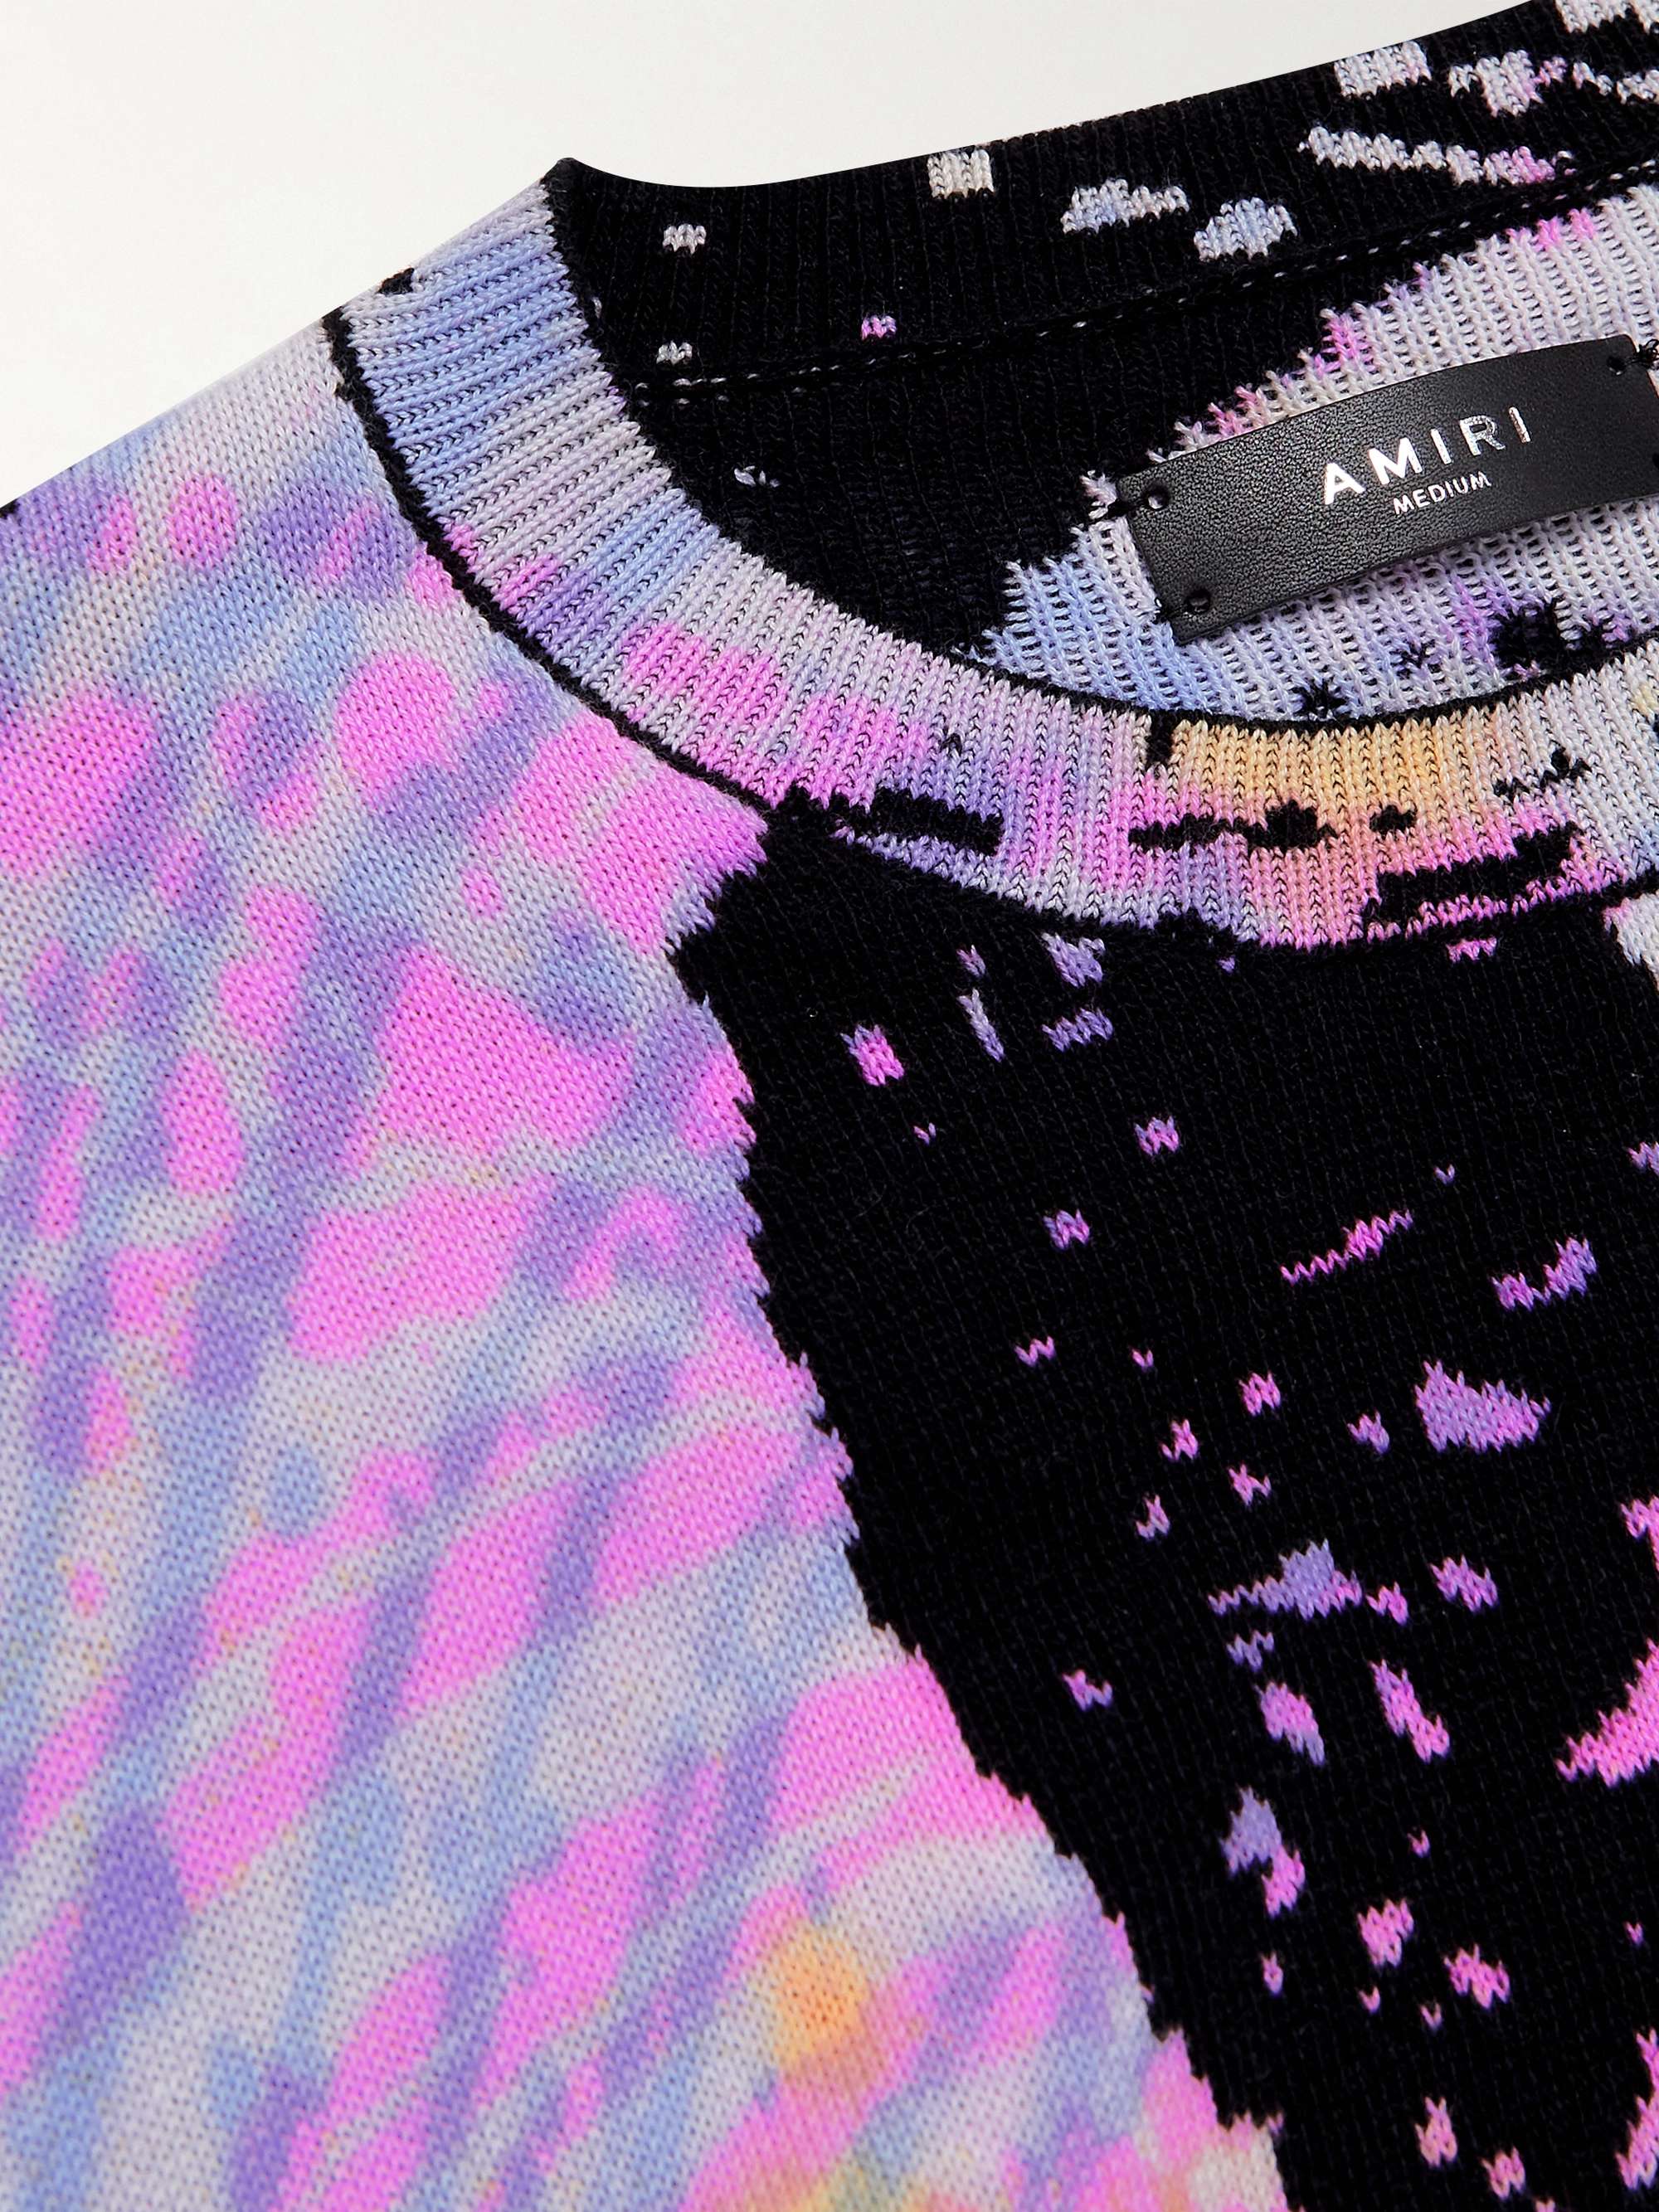 AMIRI Tie-Dyed Intarsia Cashmere Sweater